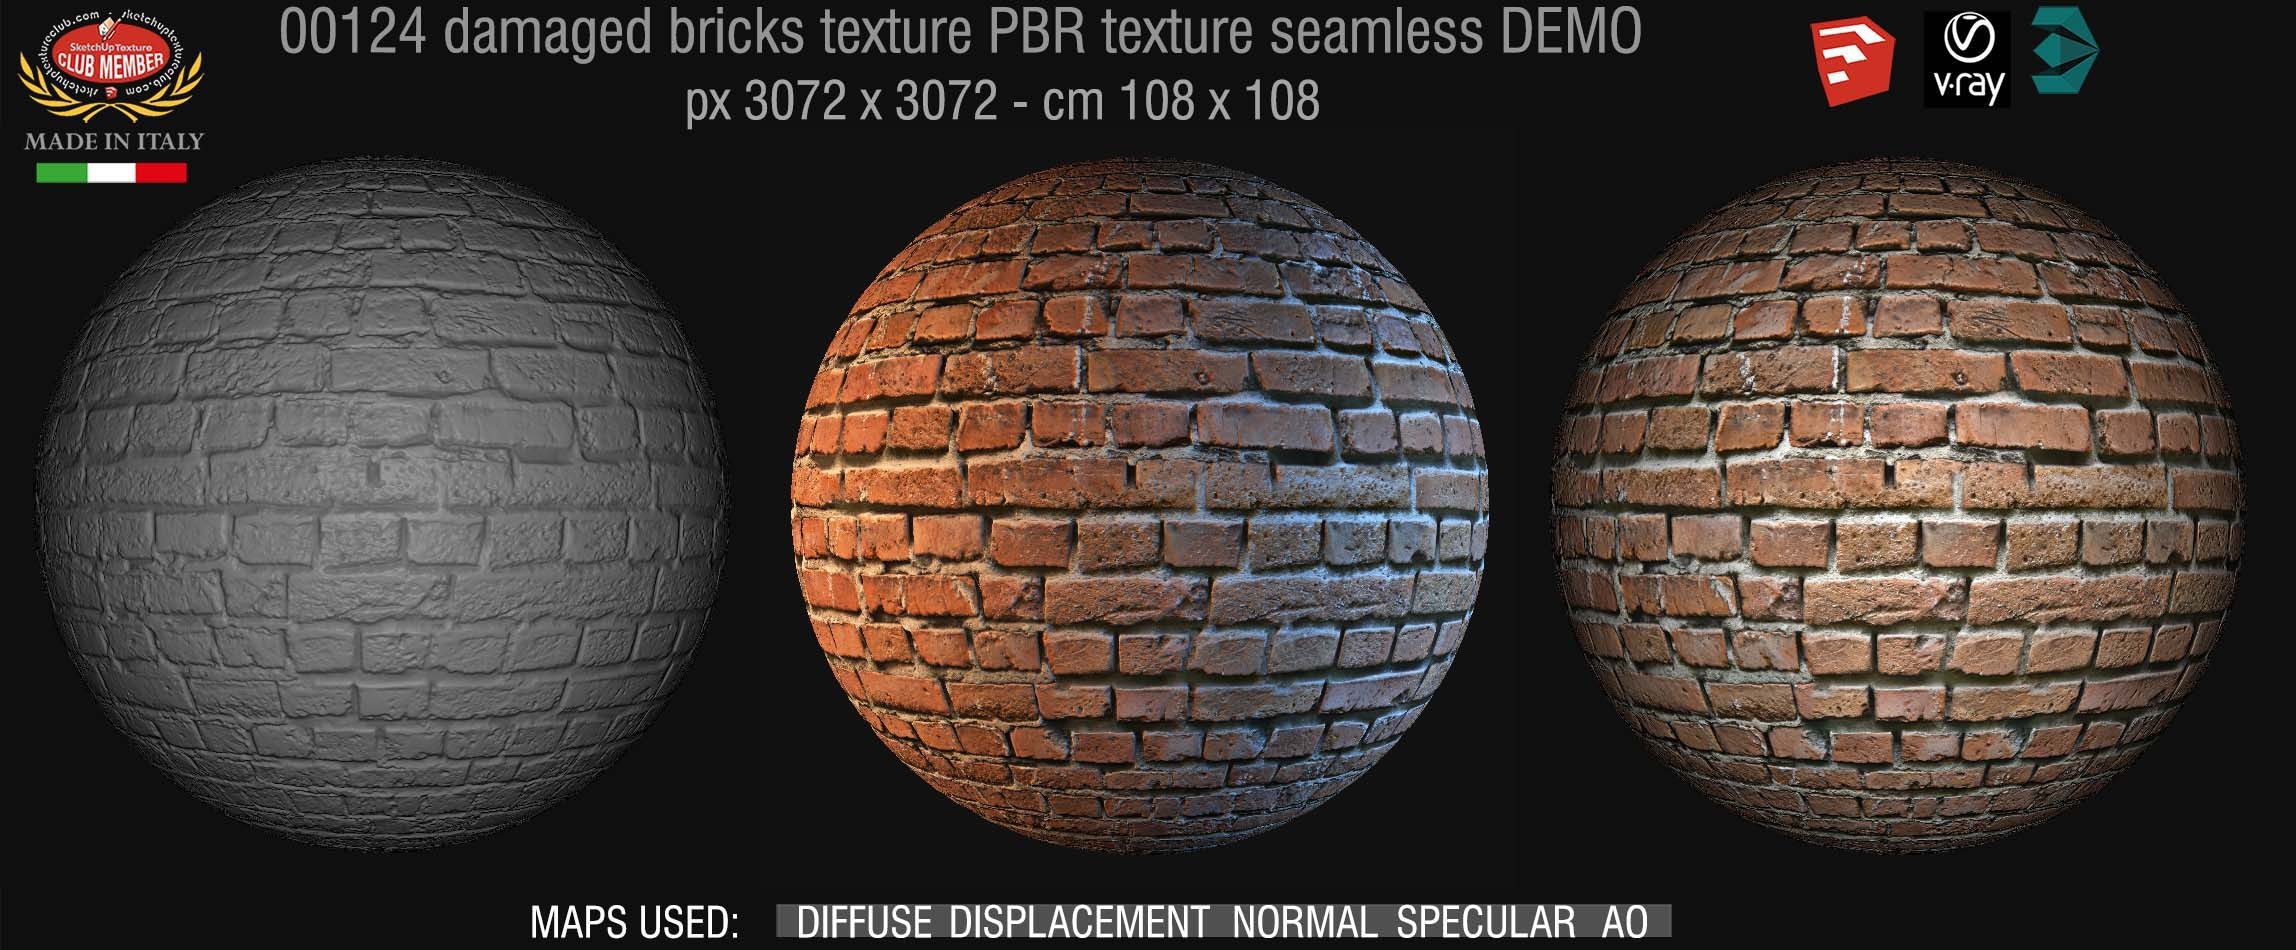 00124 Damaged bricks texture seamless